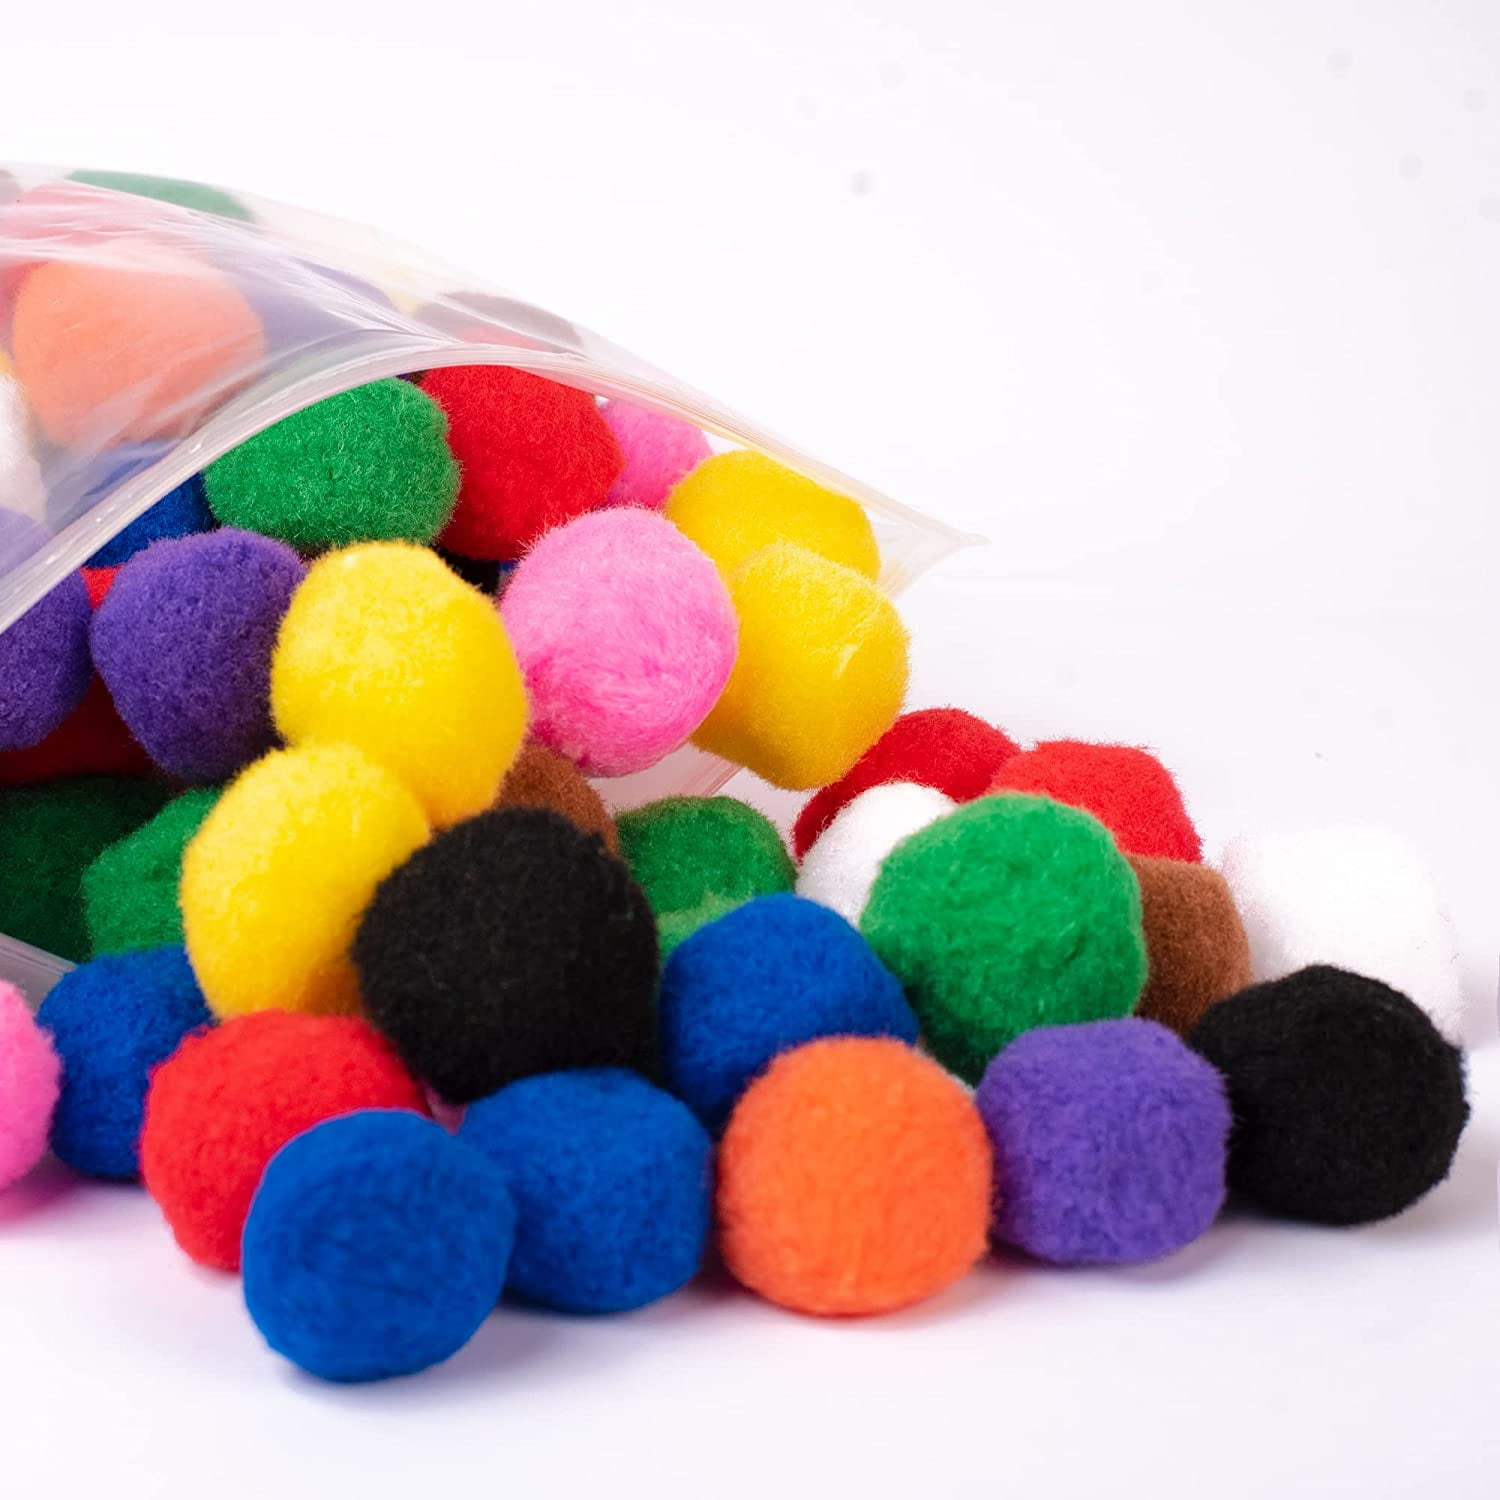 Adeweave 1.5 Inch Pom poms – Multicolor Pompoms for Crafts in